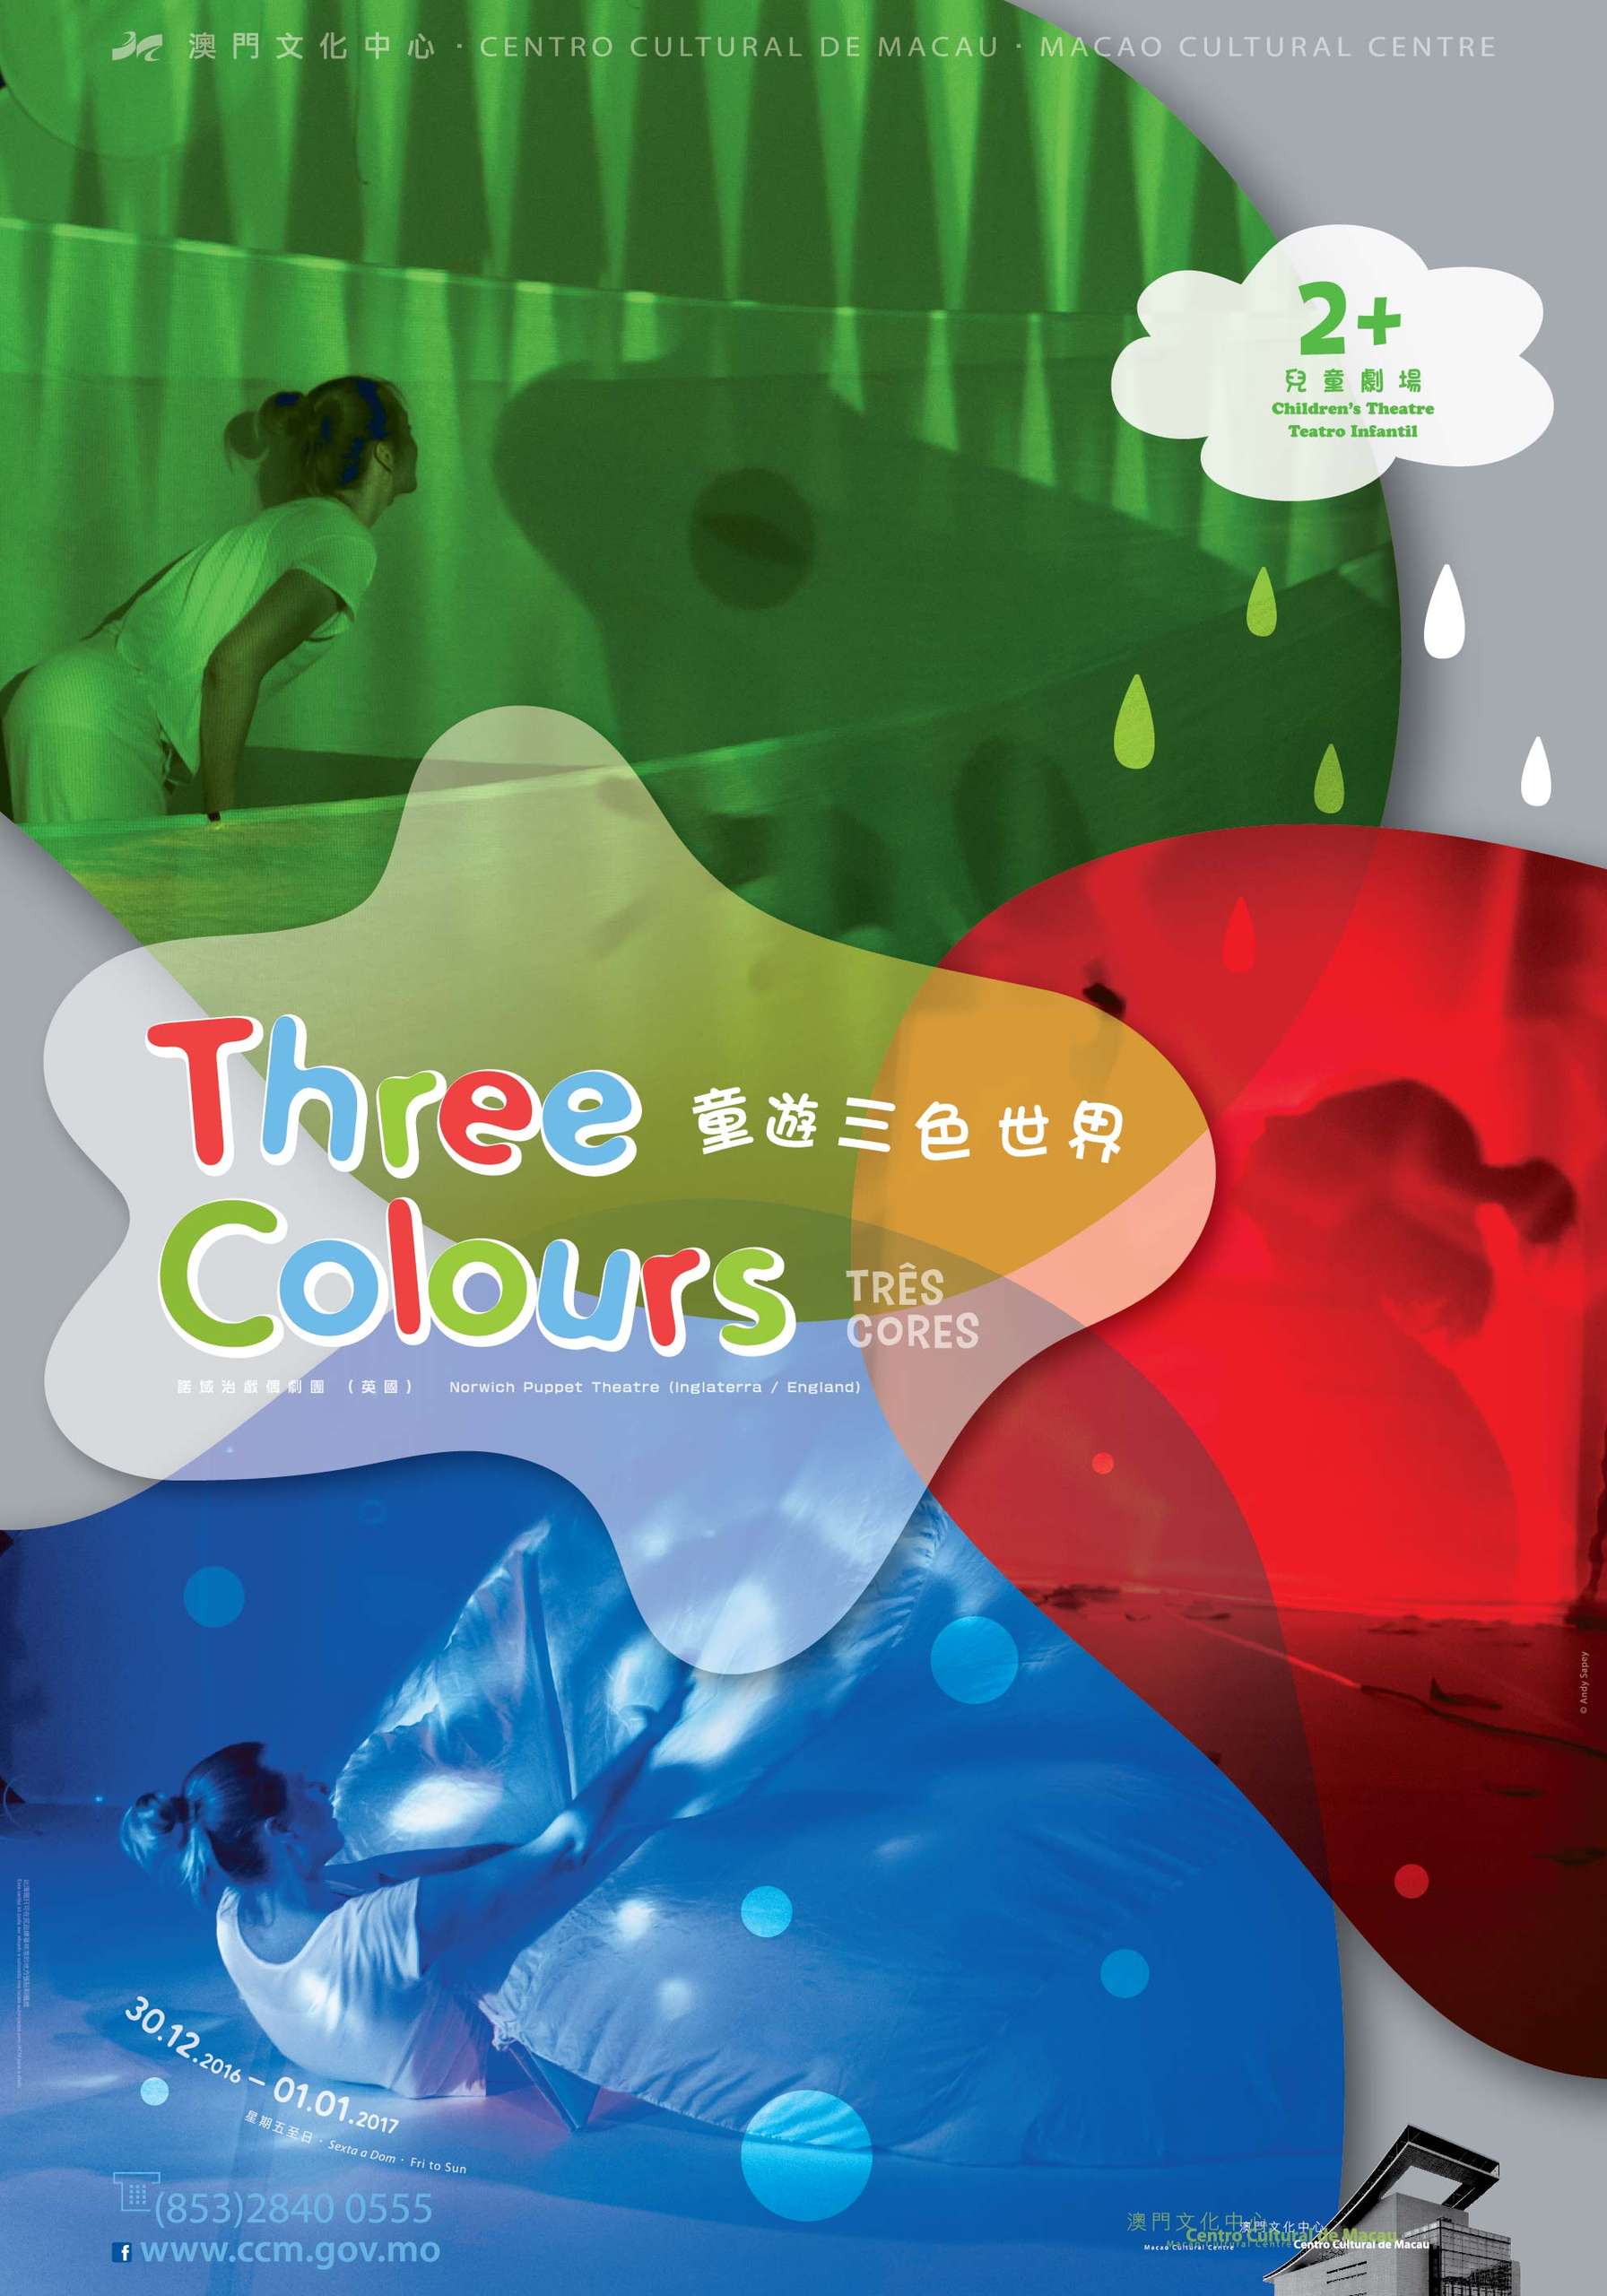 Macau Cultural centre- Three Colours - Poster_ccm